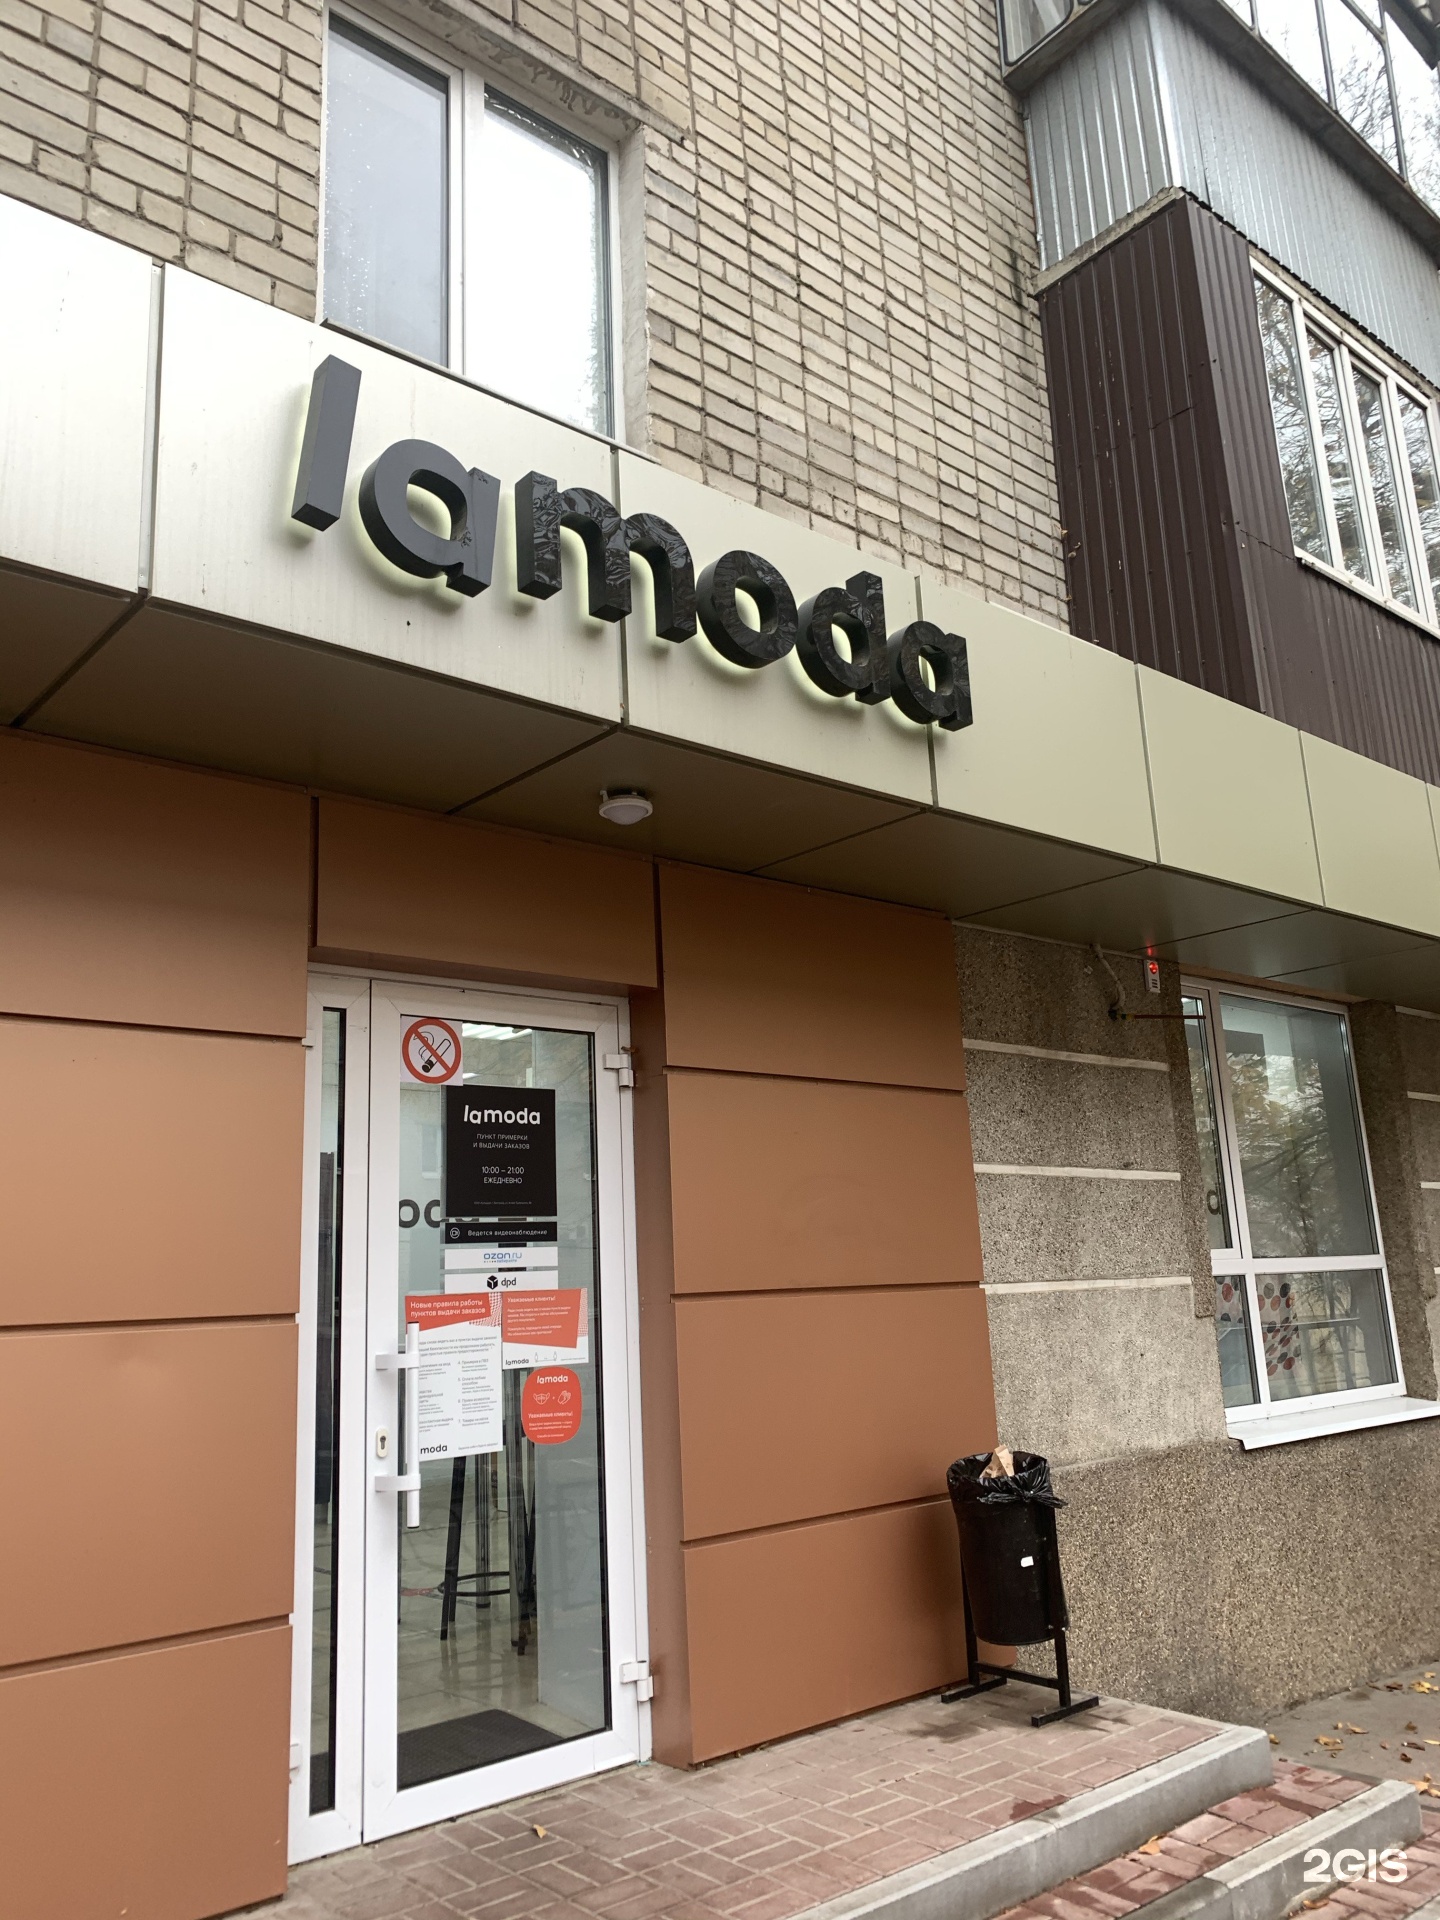 Ламоде Интернет Магазин